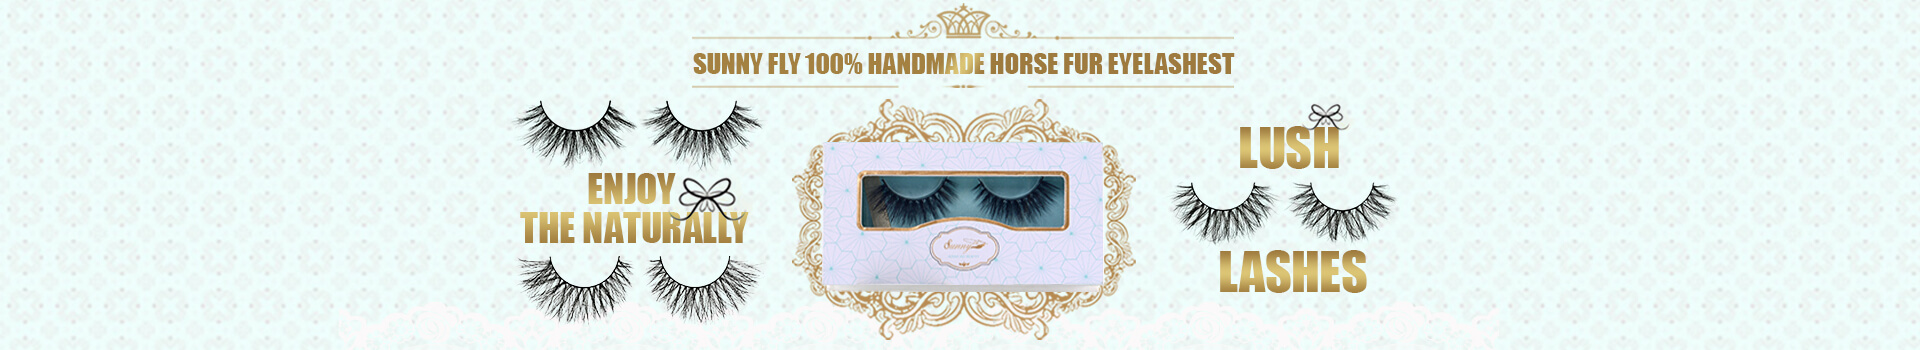 Real Horse Fur Eyesashes HF46